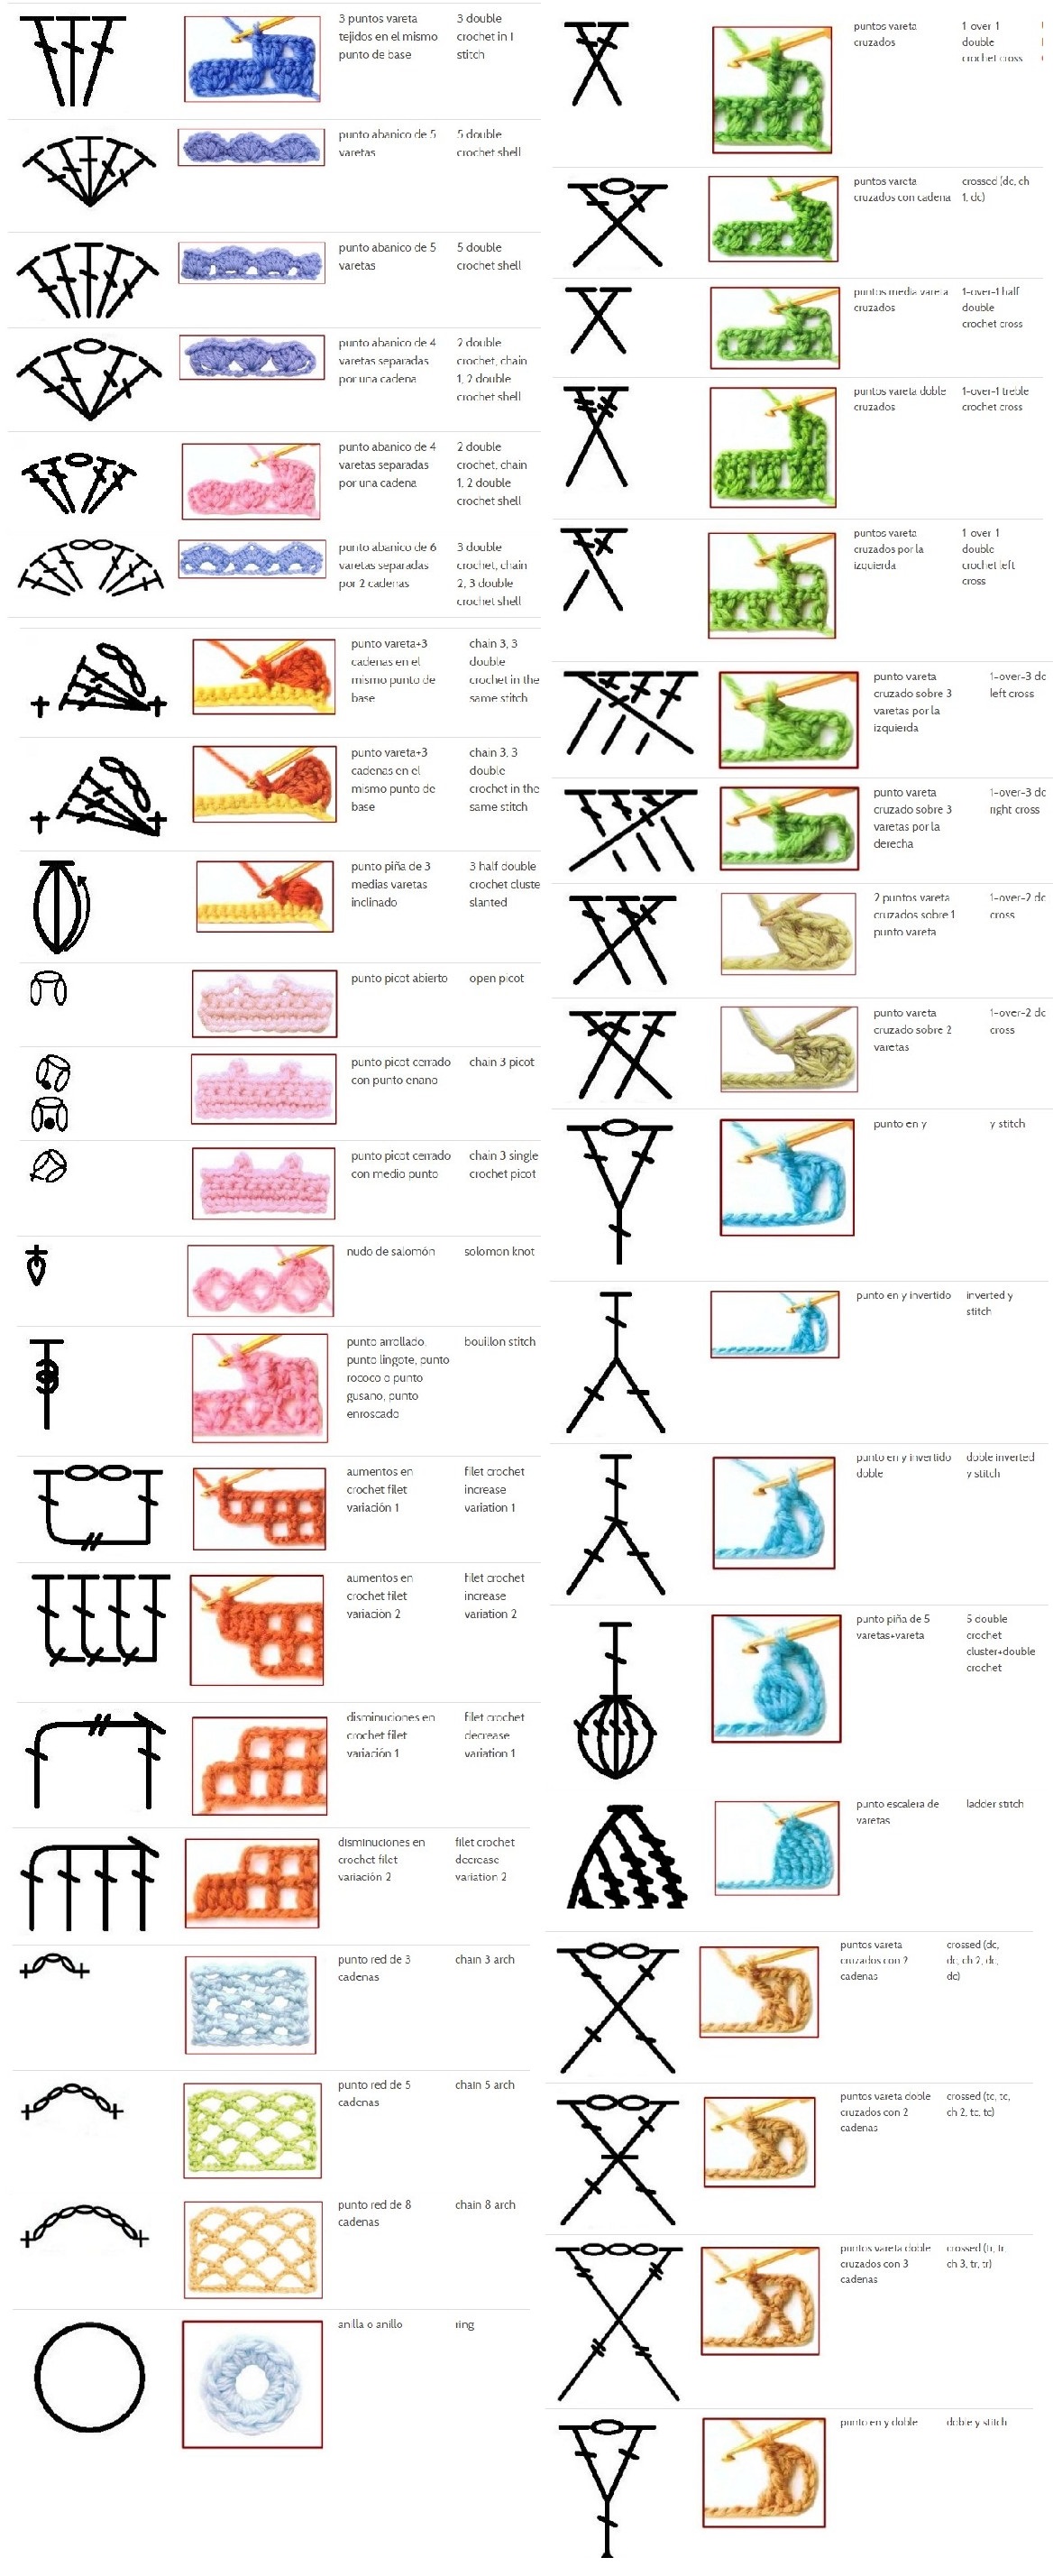 90+ Crochet Chart Symbols Made Simple